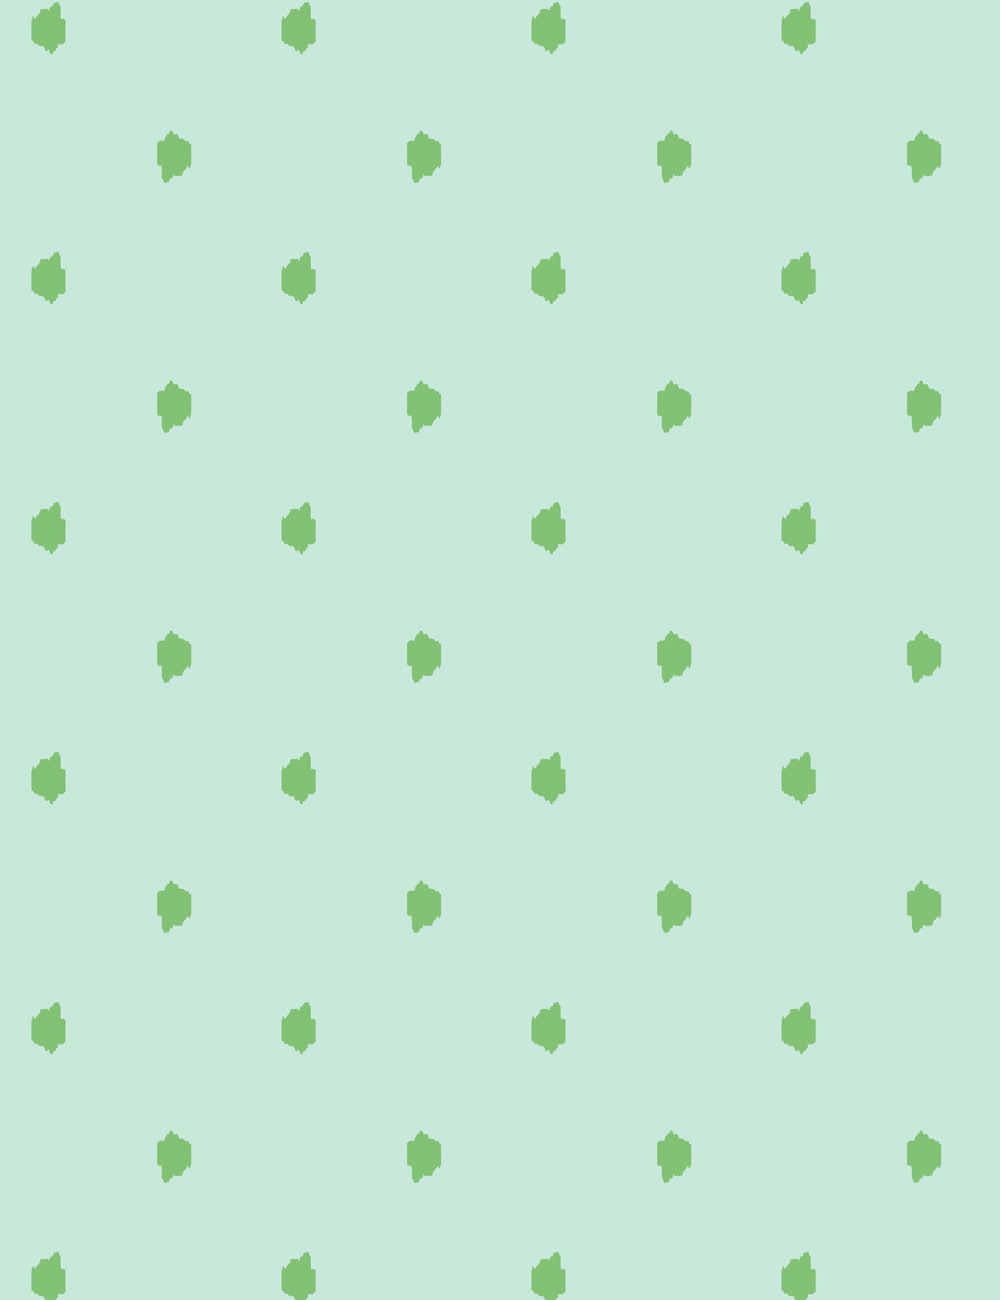 Download Cute Mint Green Aesthetic Wallpaper